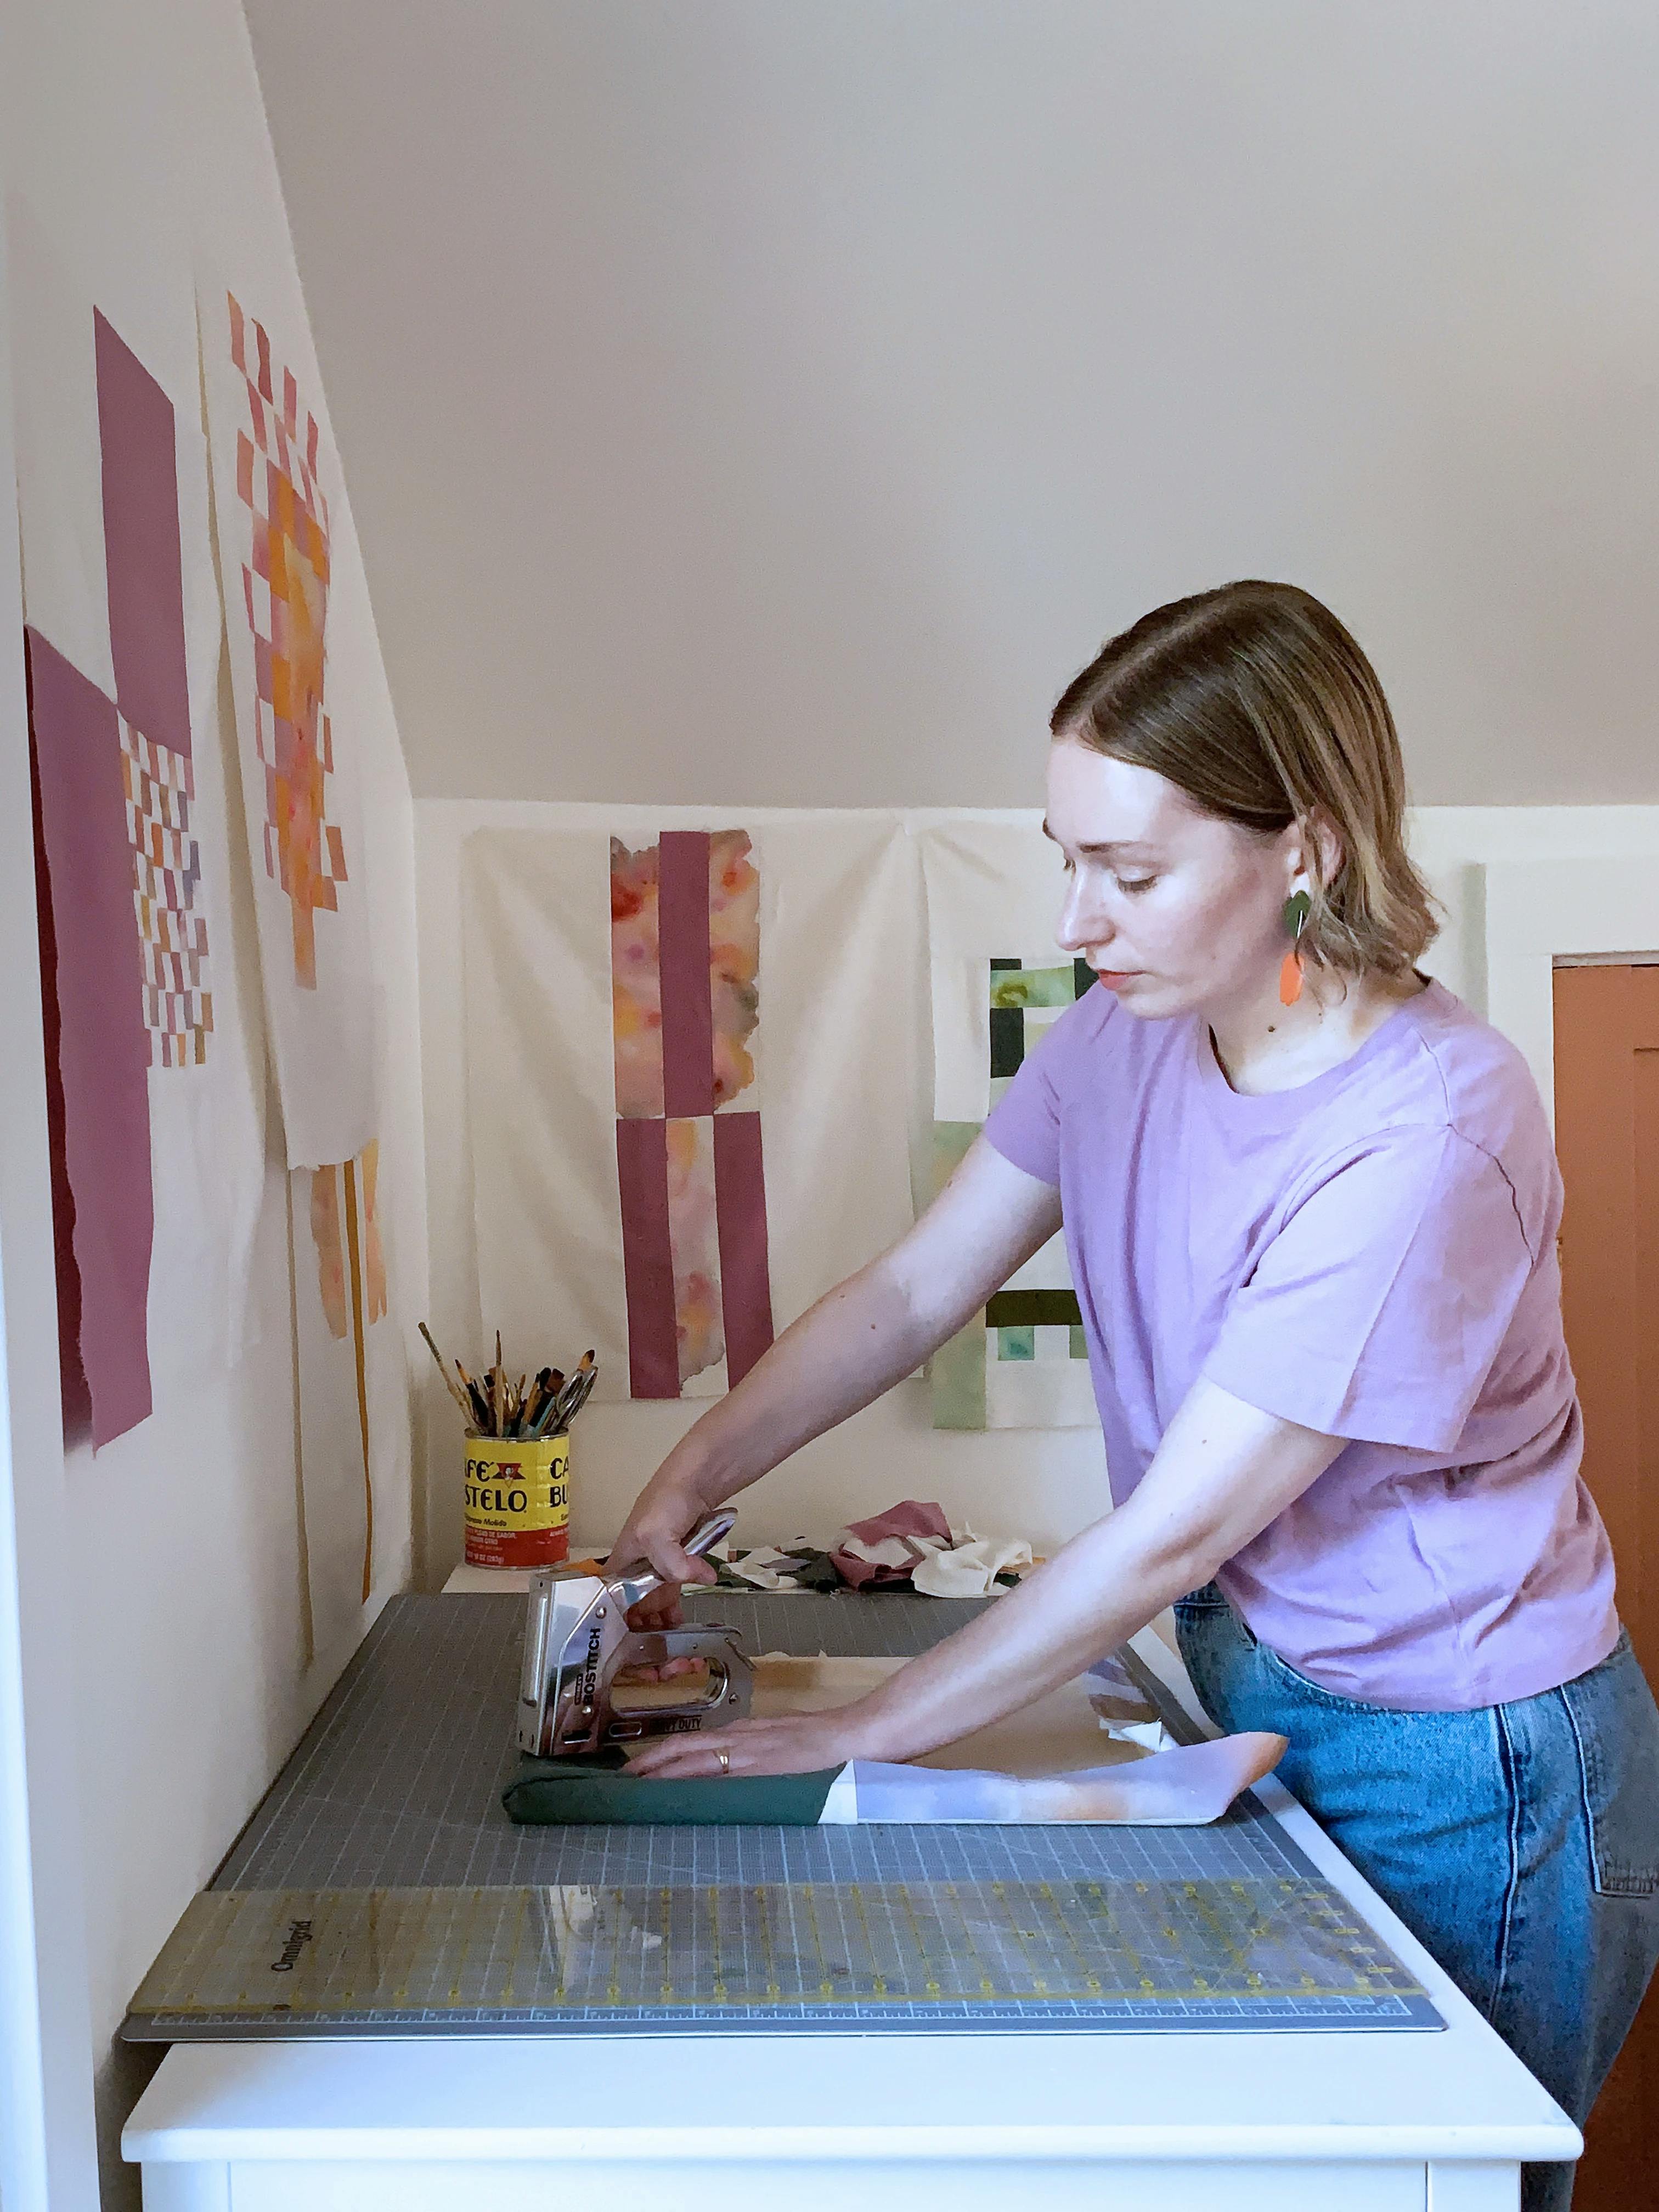 Artist Anastasia Greer wearing a purple shirt in her studio using a staple gun on her stitched silk work.